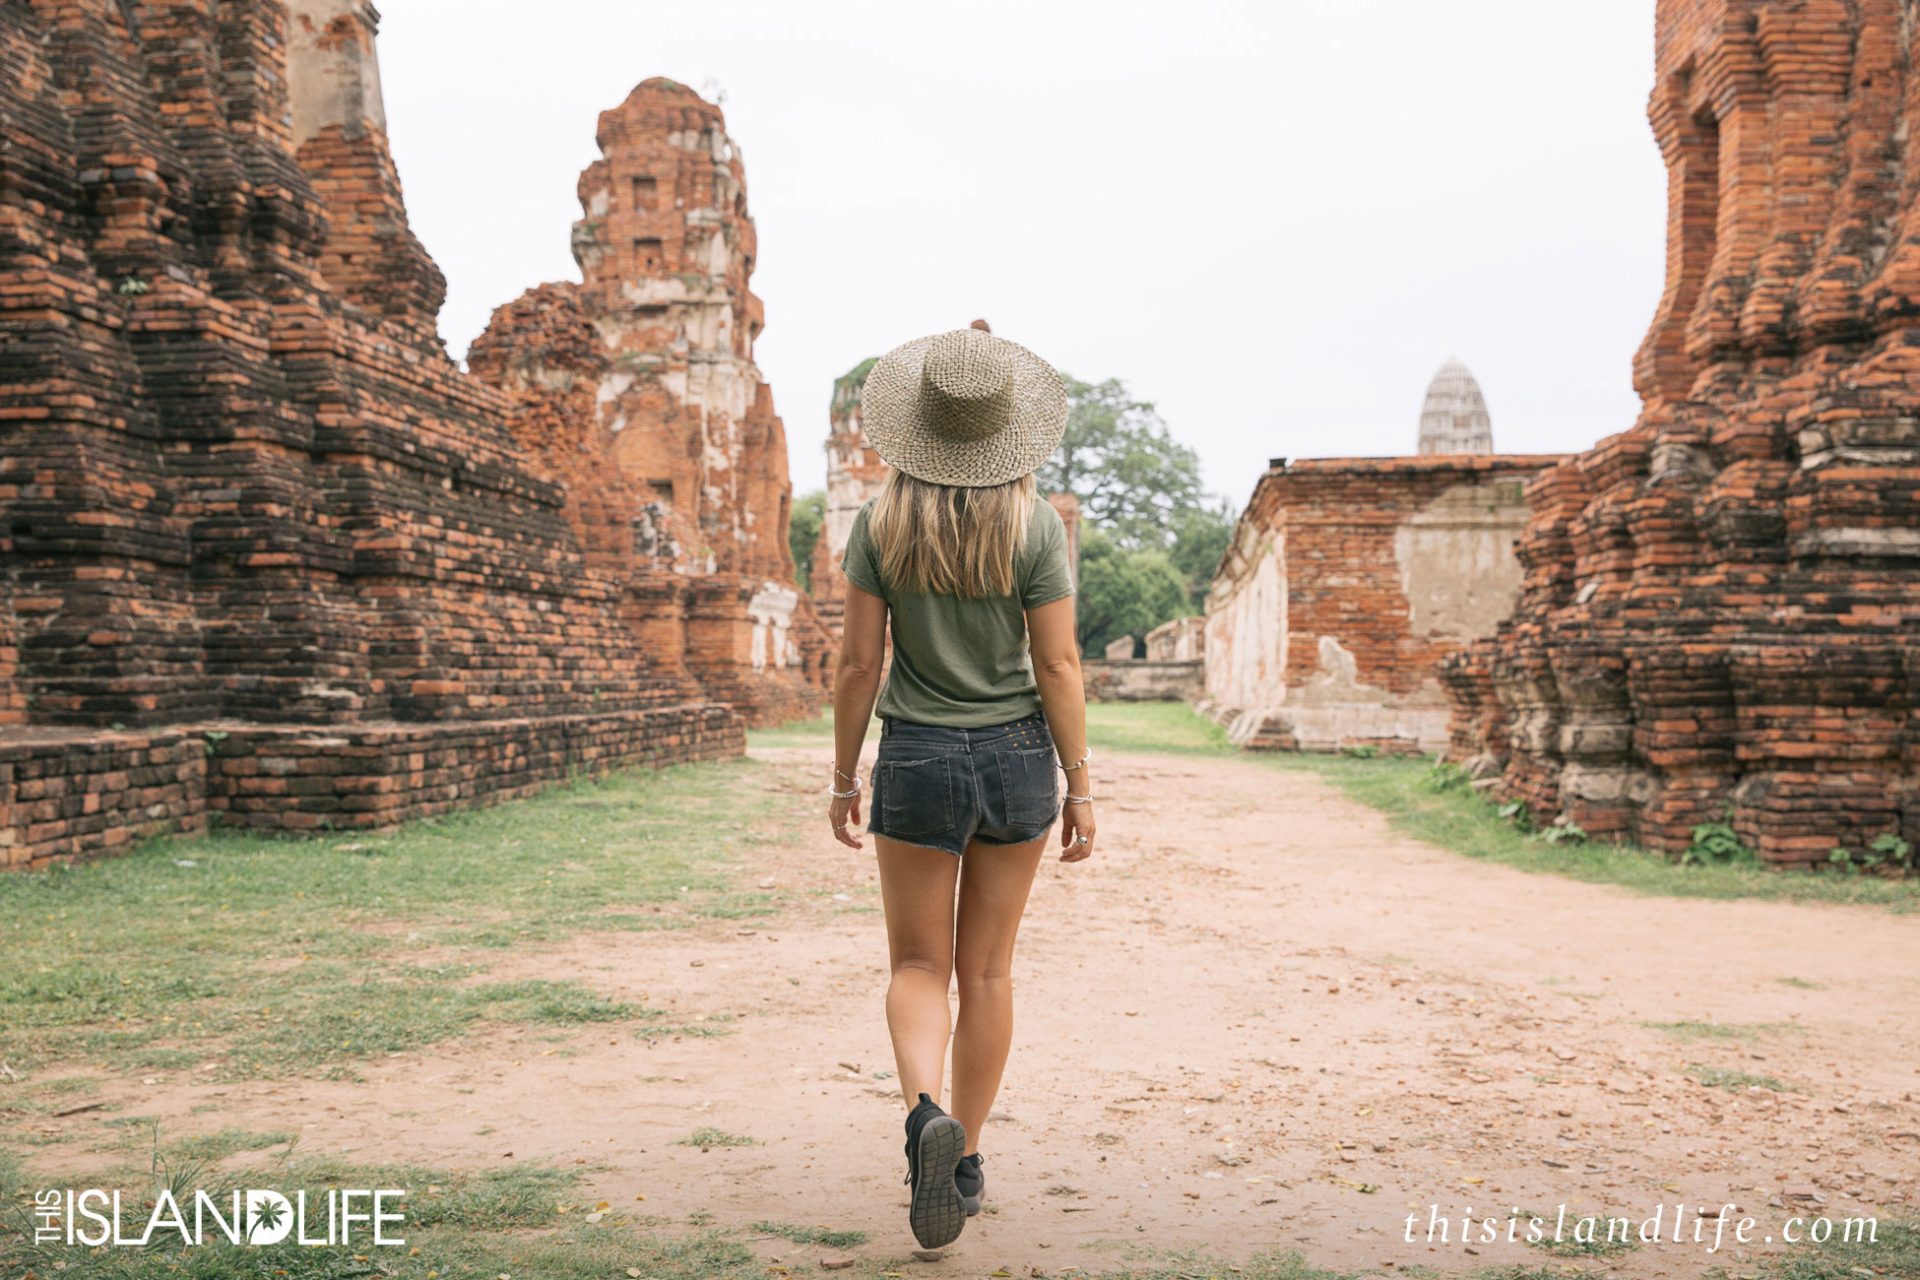 This Island Life | The ancient island kingdom of Ayutthaya